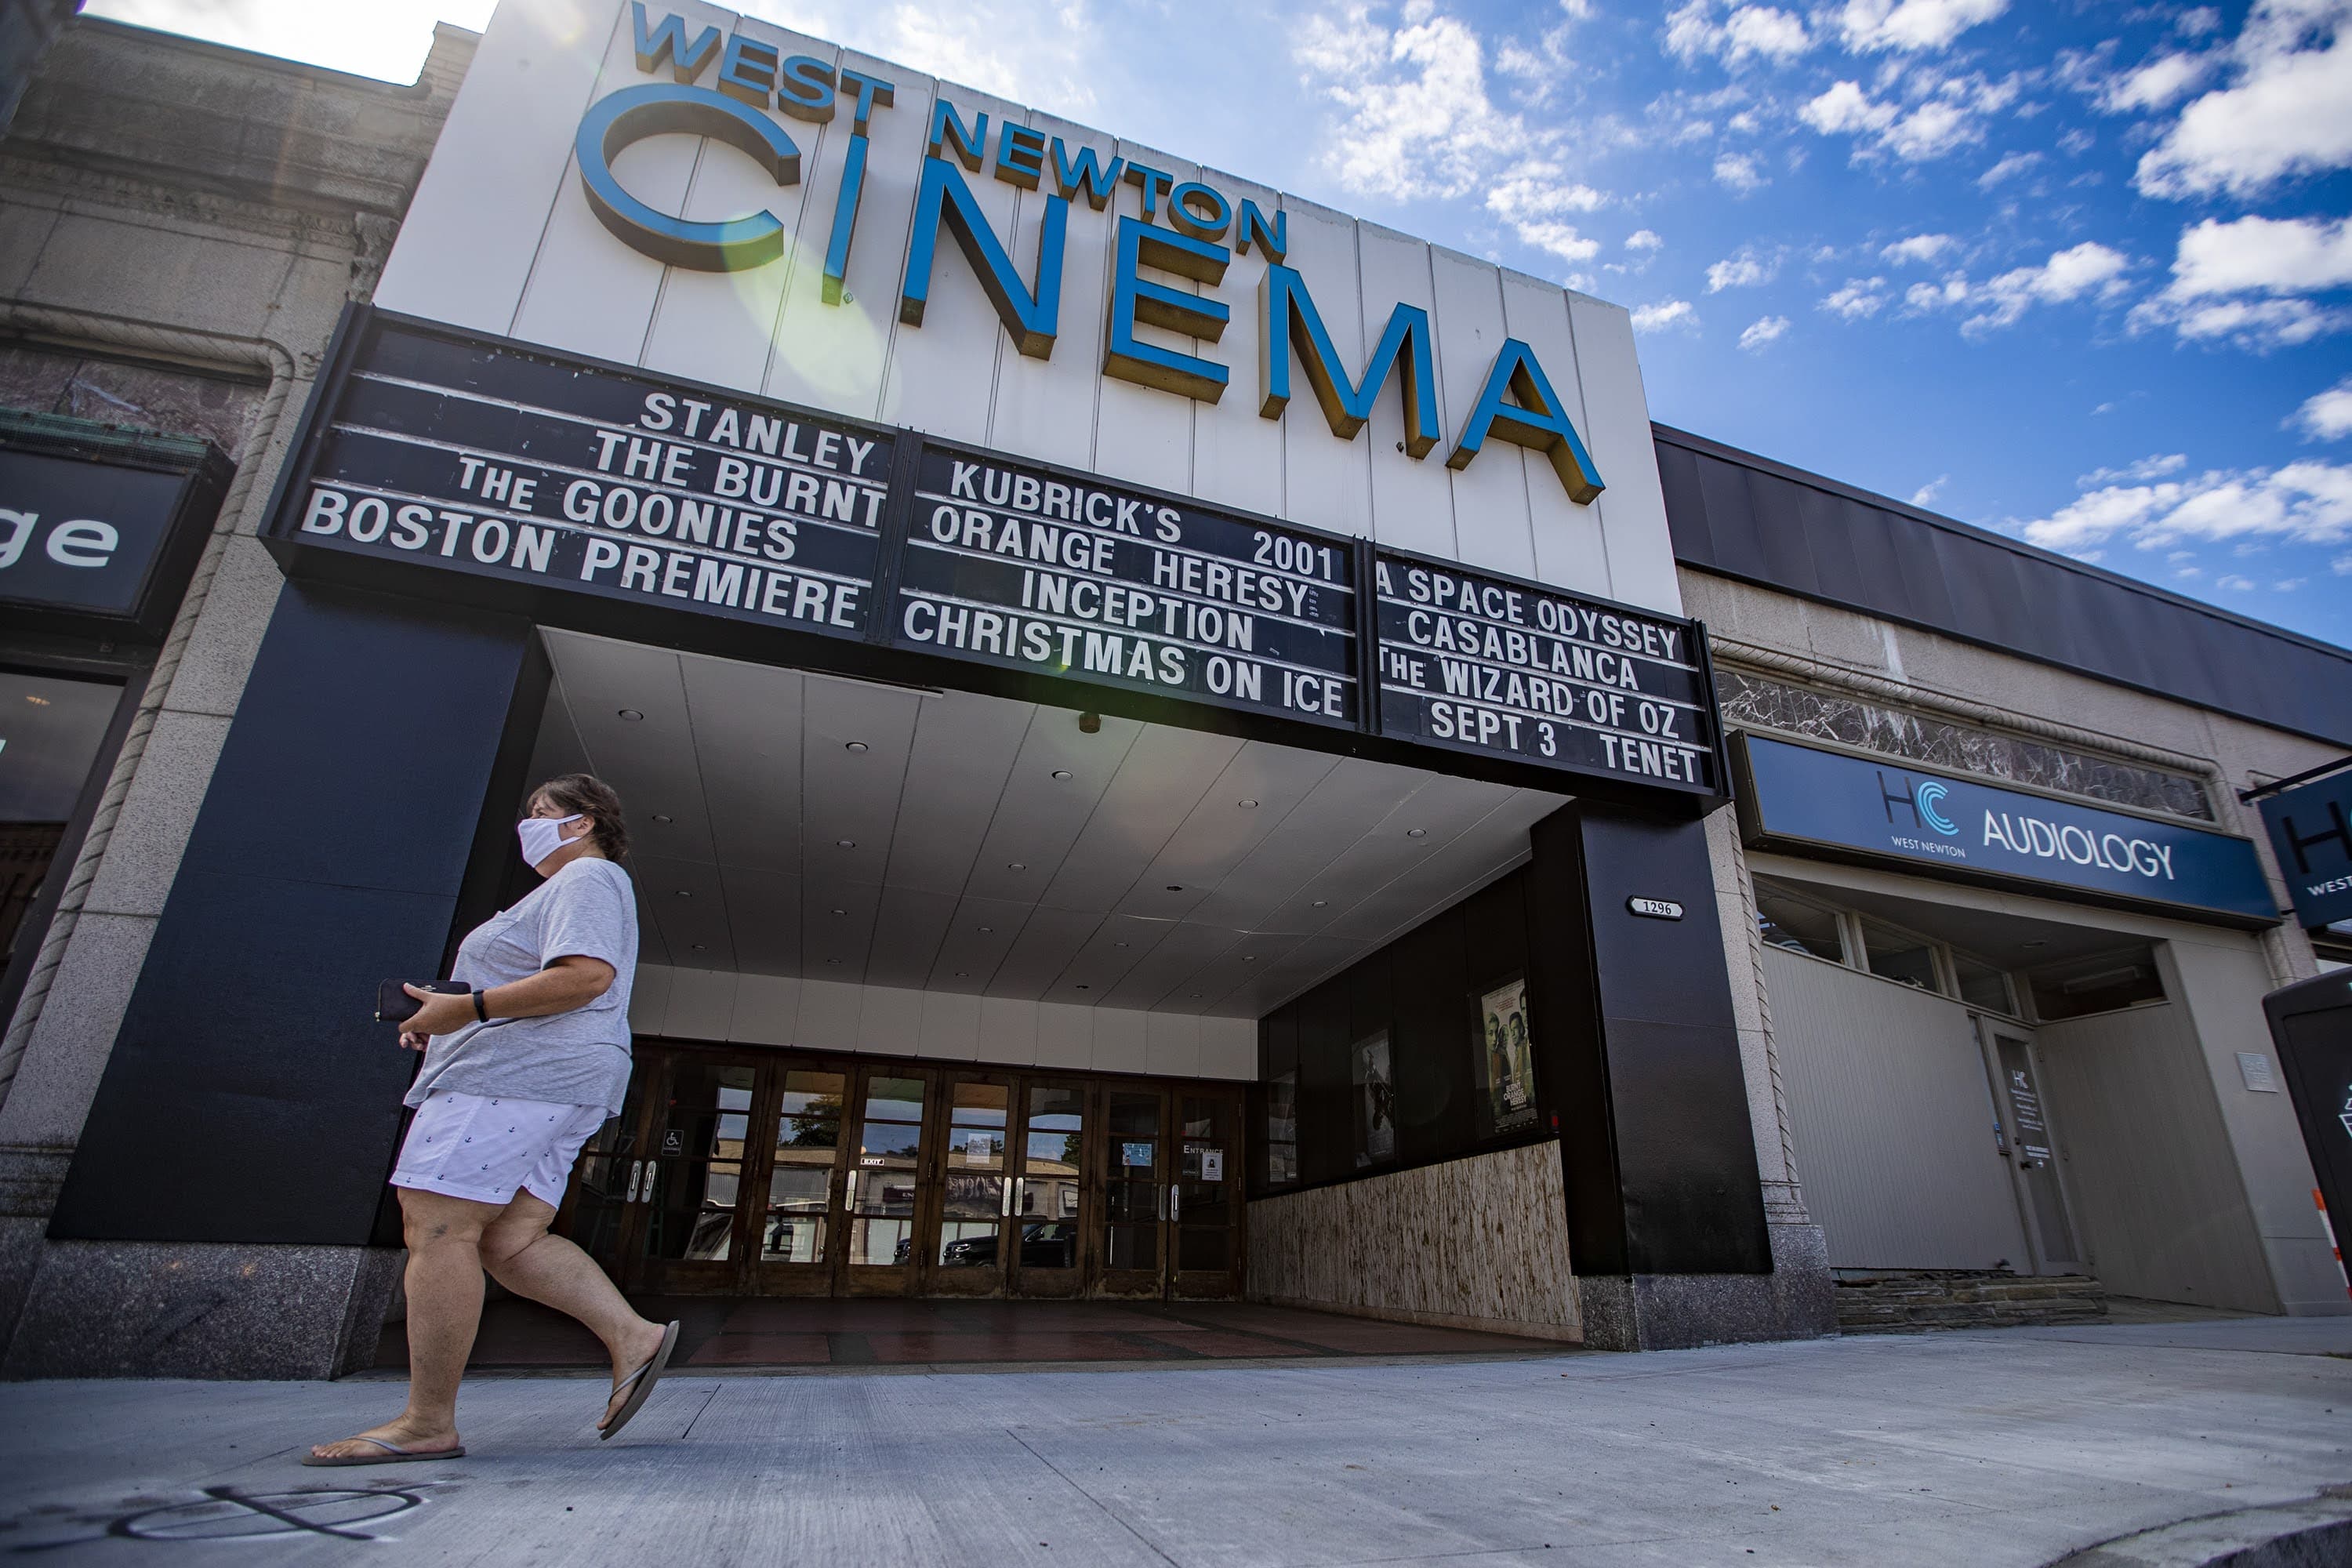 The West Newton Cinema in August. (Jesse Costa/WBUR)